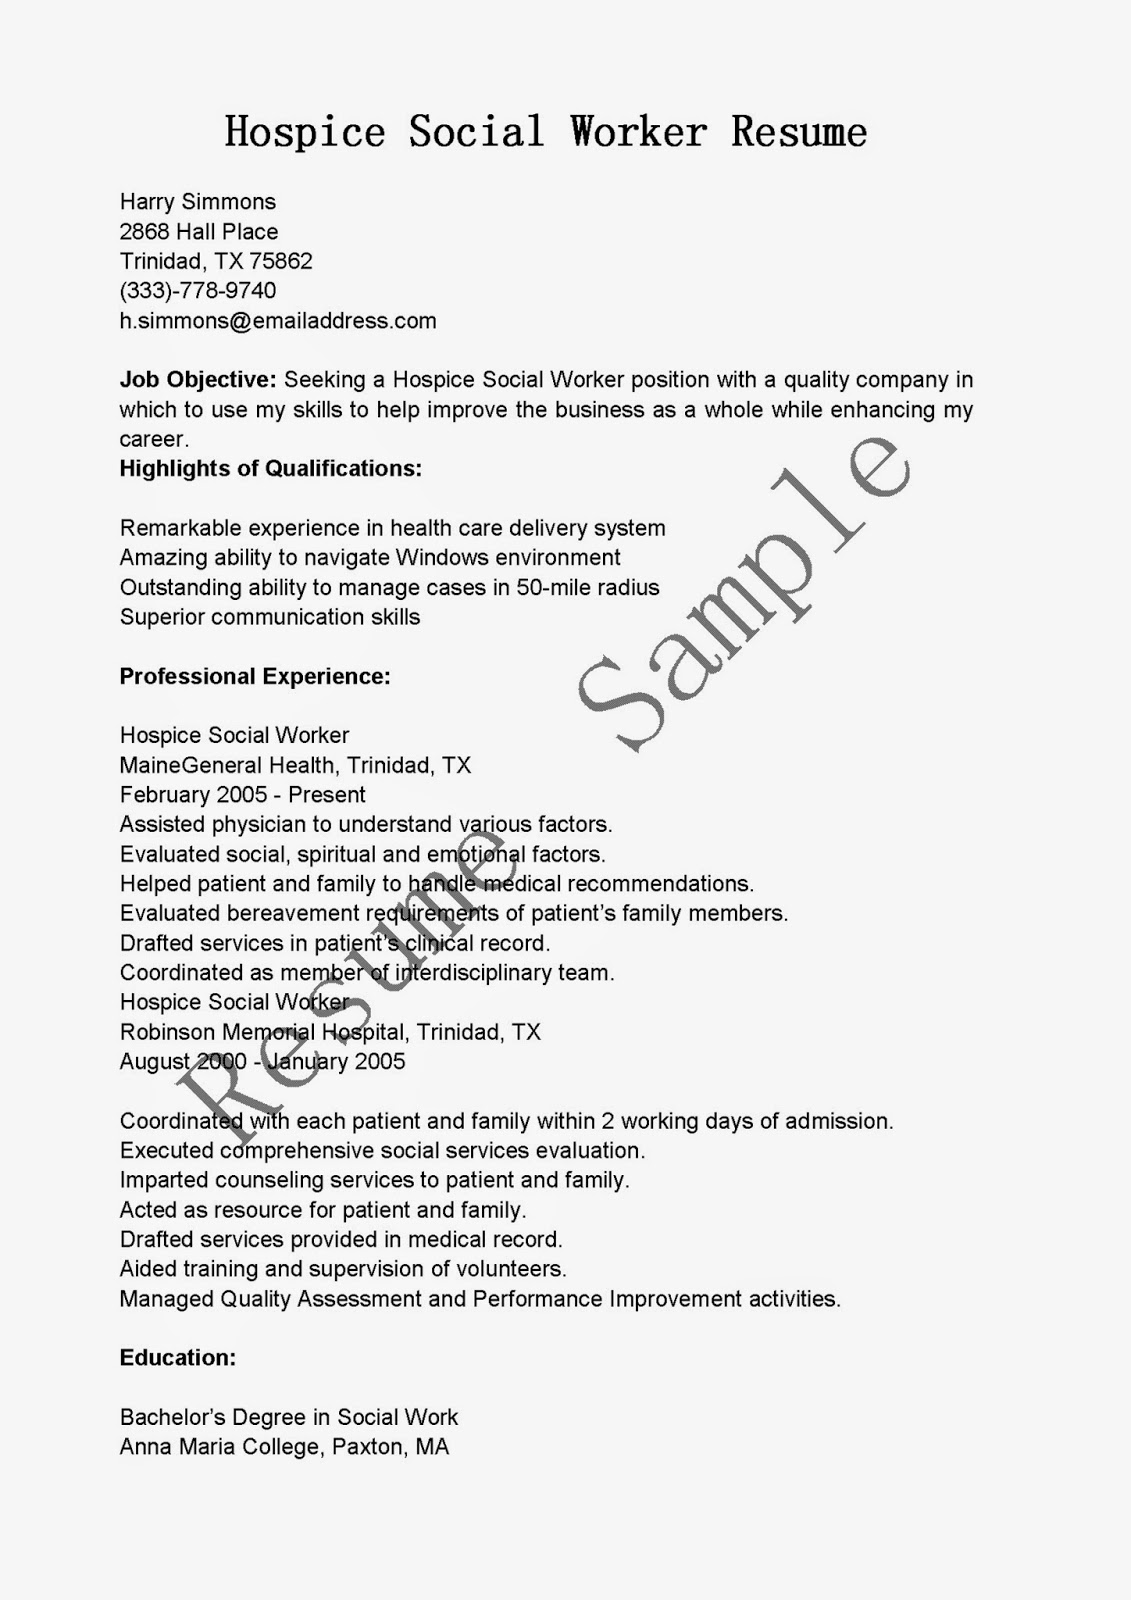 Sample resume for social service work